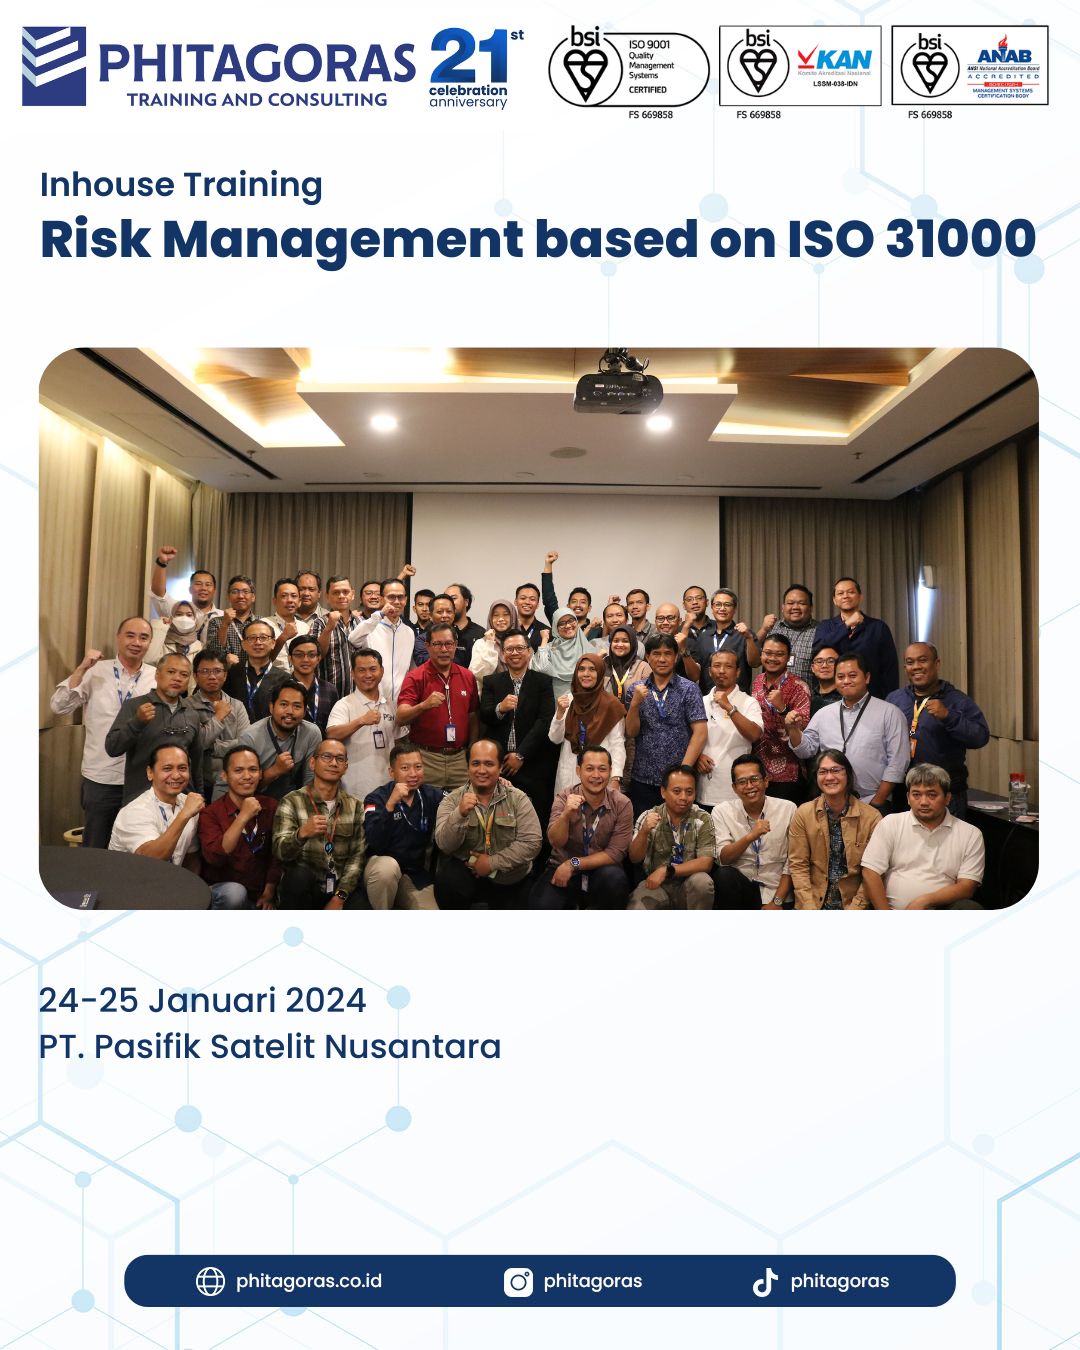 Inhouse Training Risk Management based on ISO 31000 - PT. Pasifik Satelit Nusantara